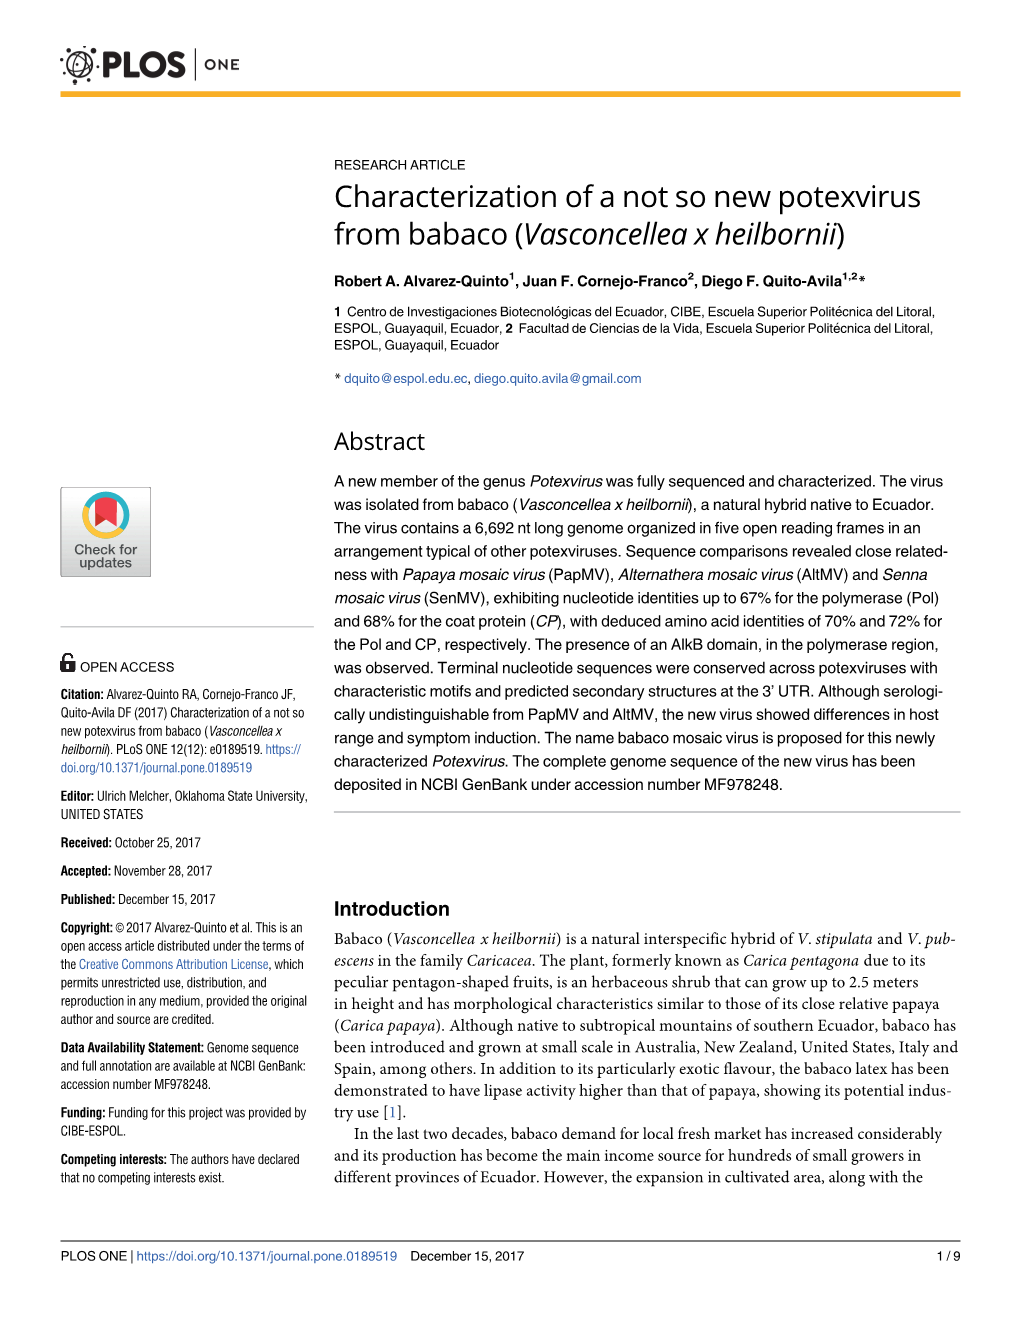 Characterization of a Not So New Potexvirus from Babaco (Vasconcellea X Heilbornii)